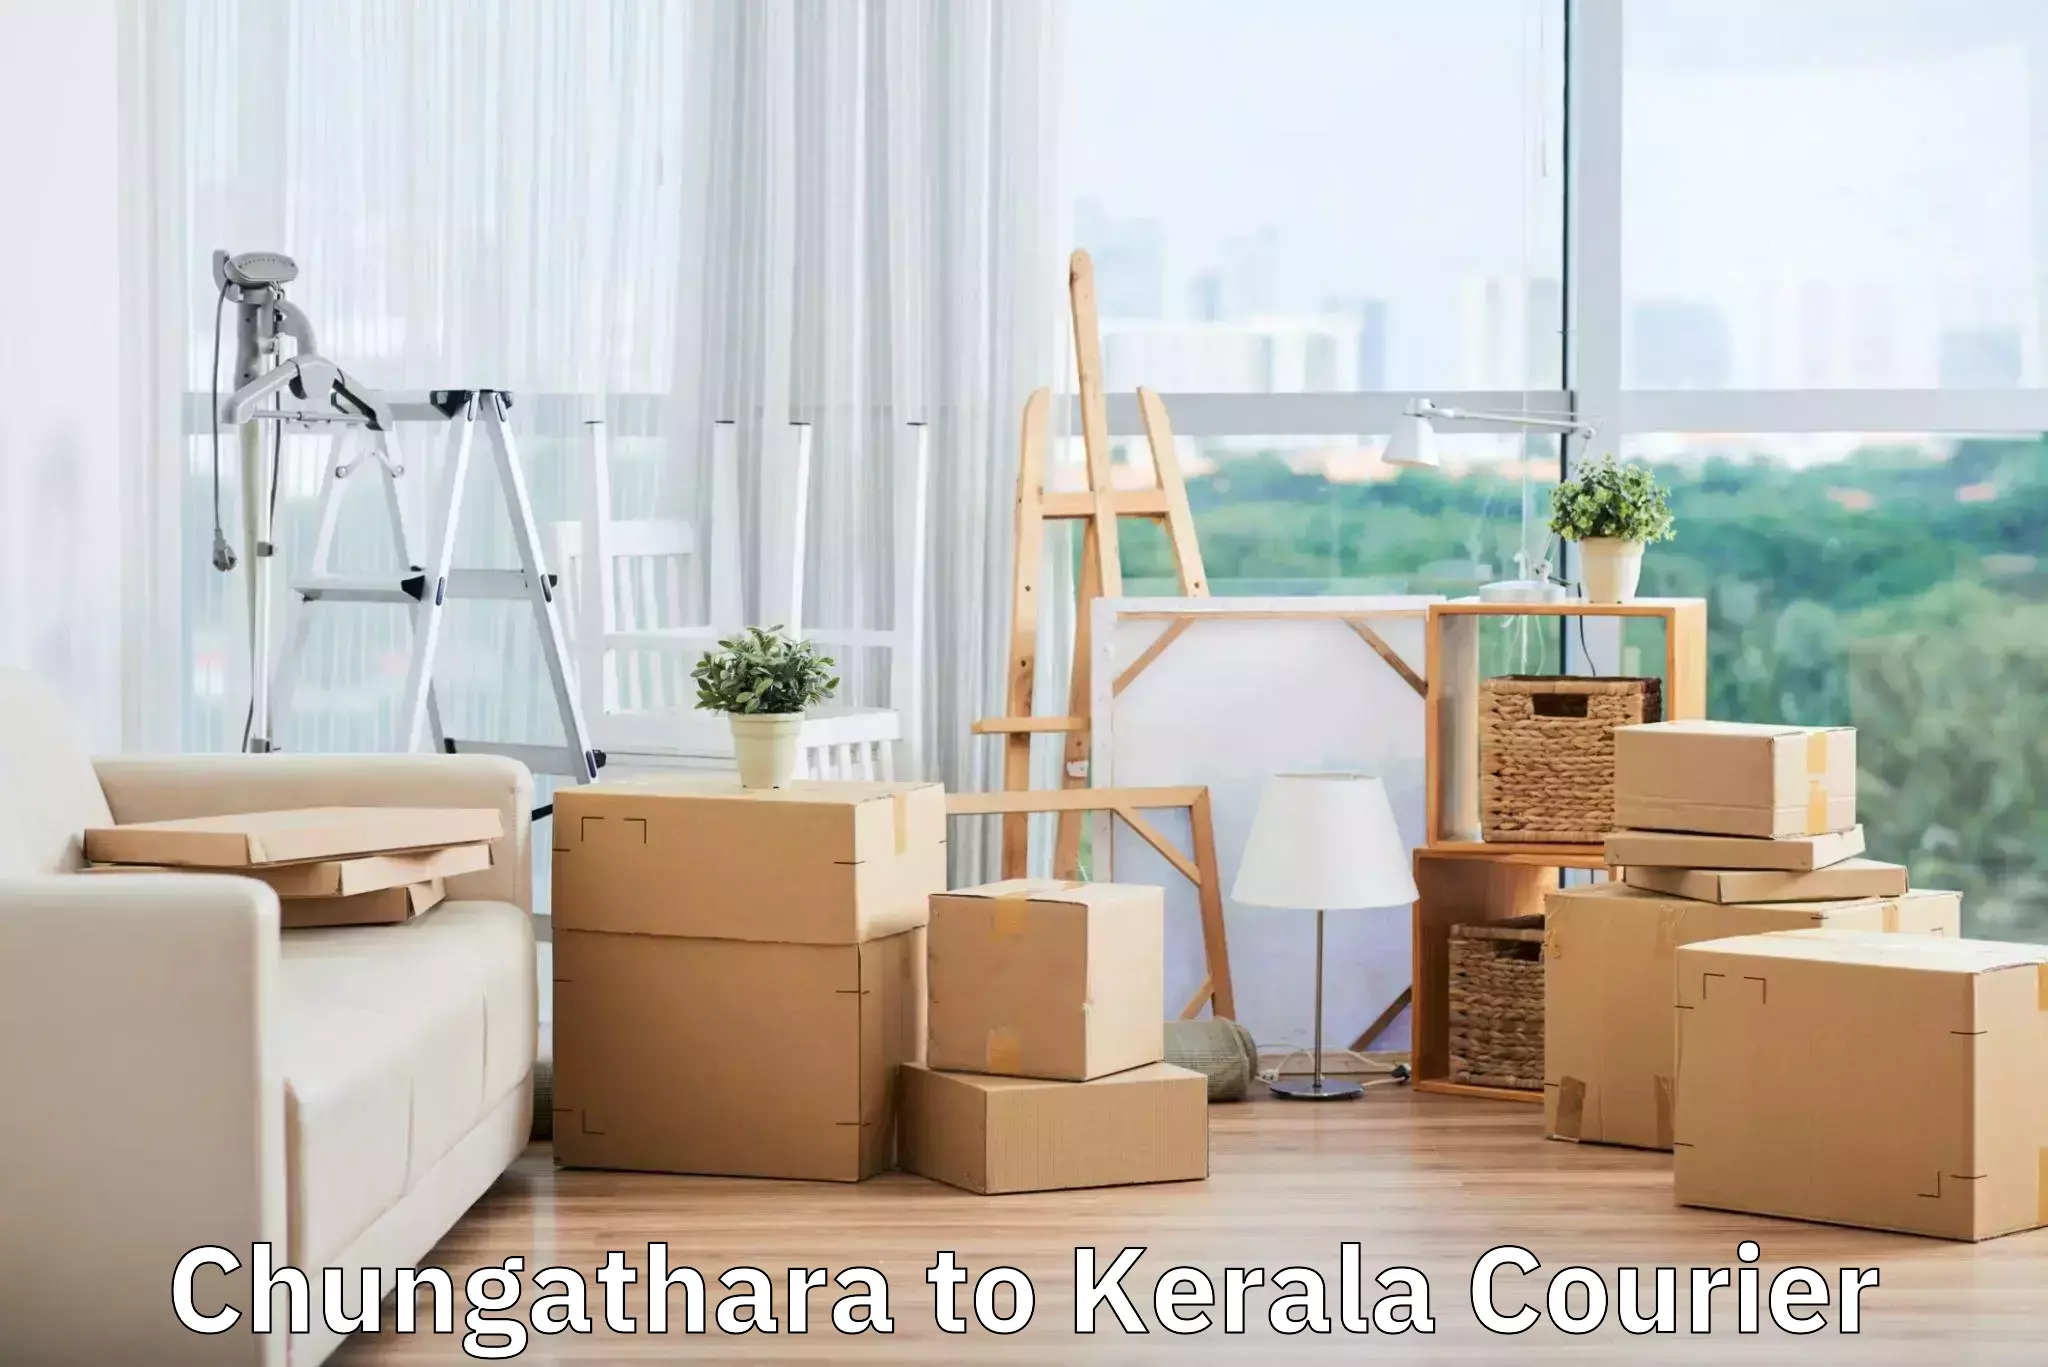 Doorstep luggage collection Chungathara to Kerala